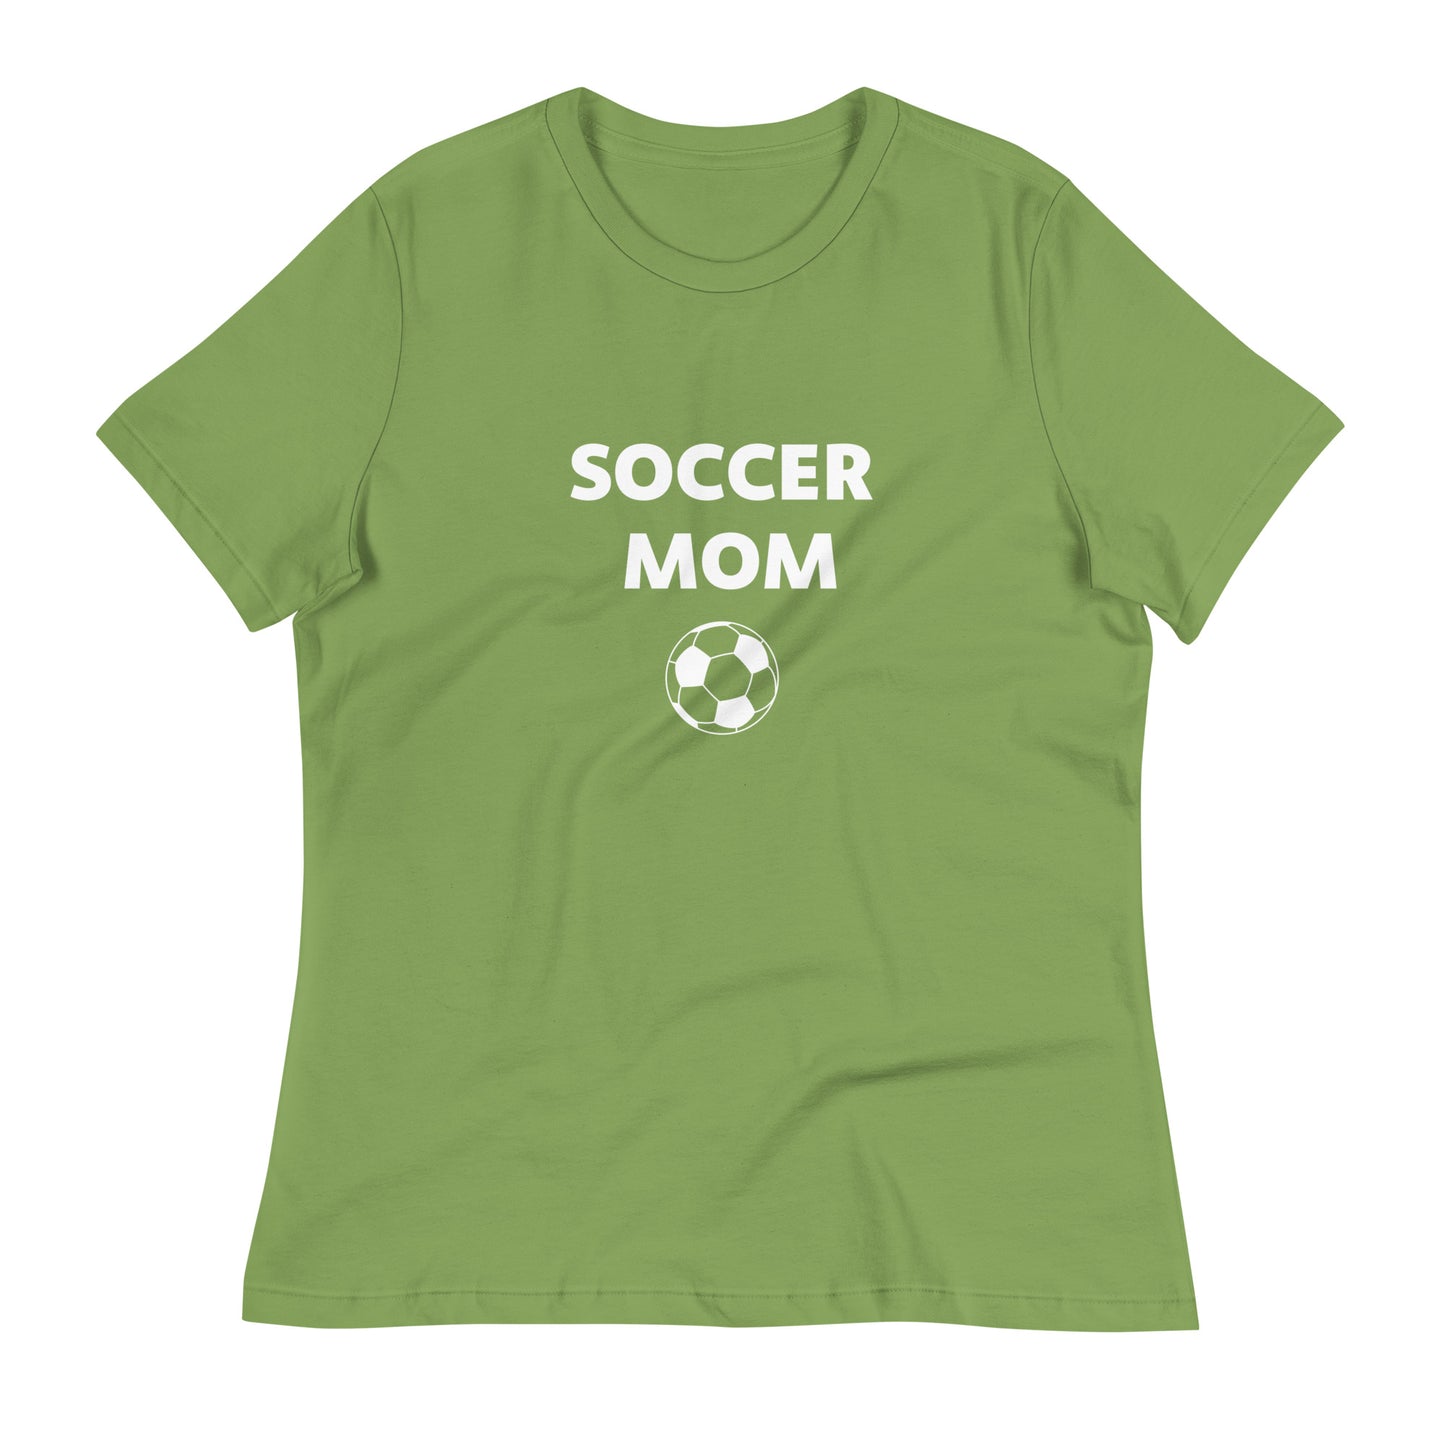 Soccer Mom Printed T-Shirt